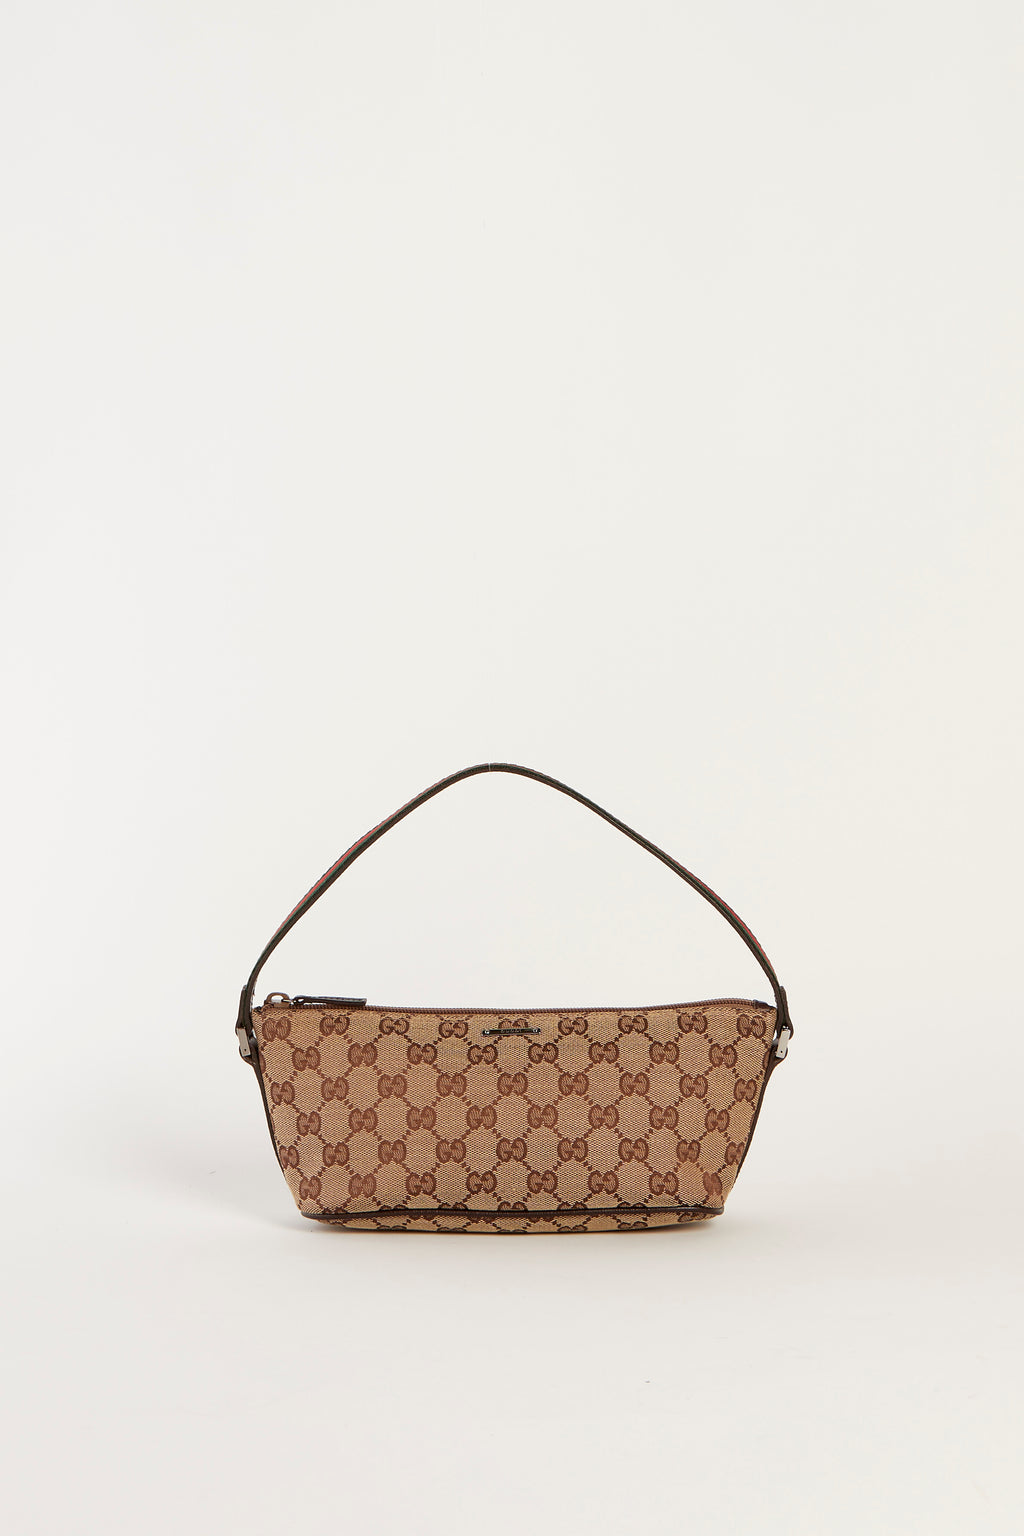 Vintage Gucci Classic GG Monogram Small Shoulder Bag